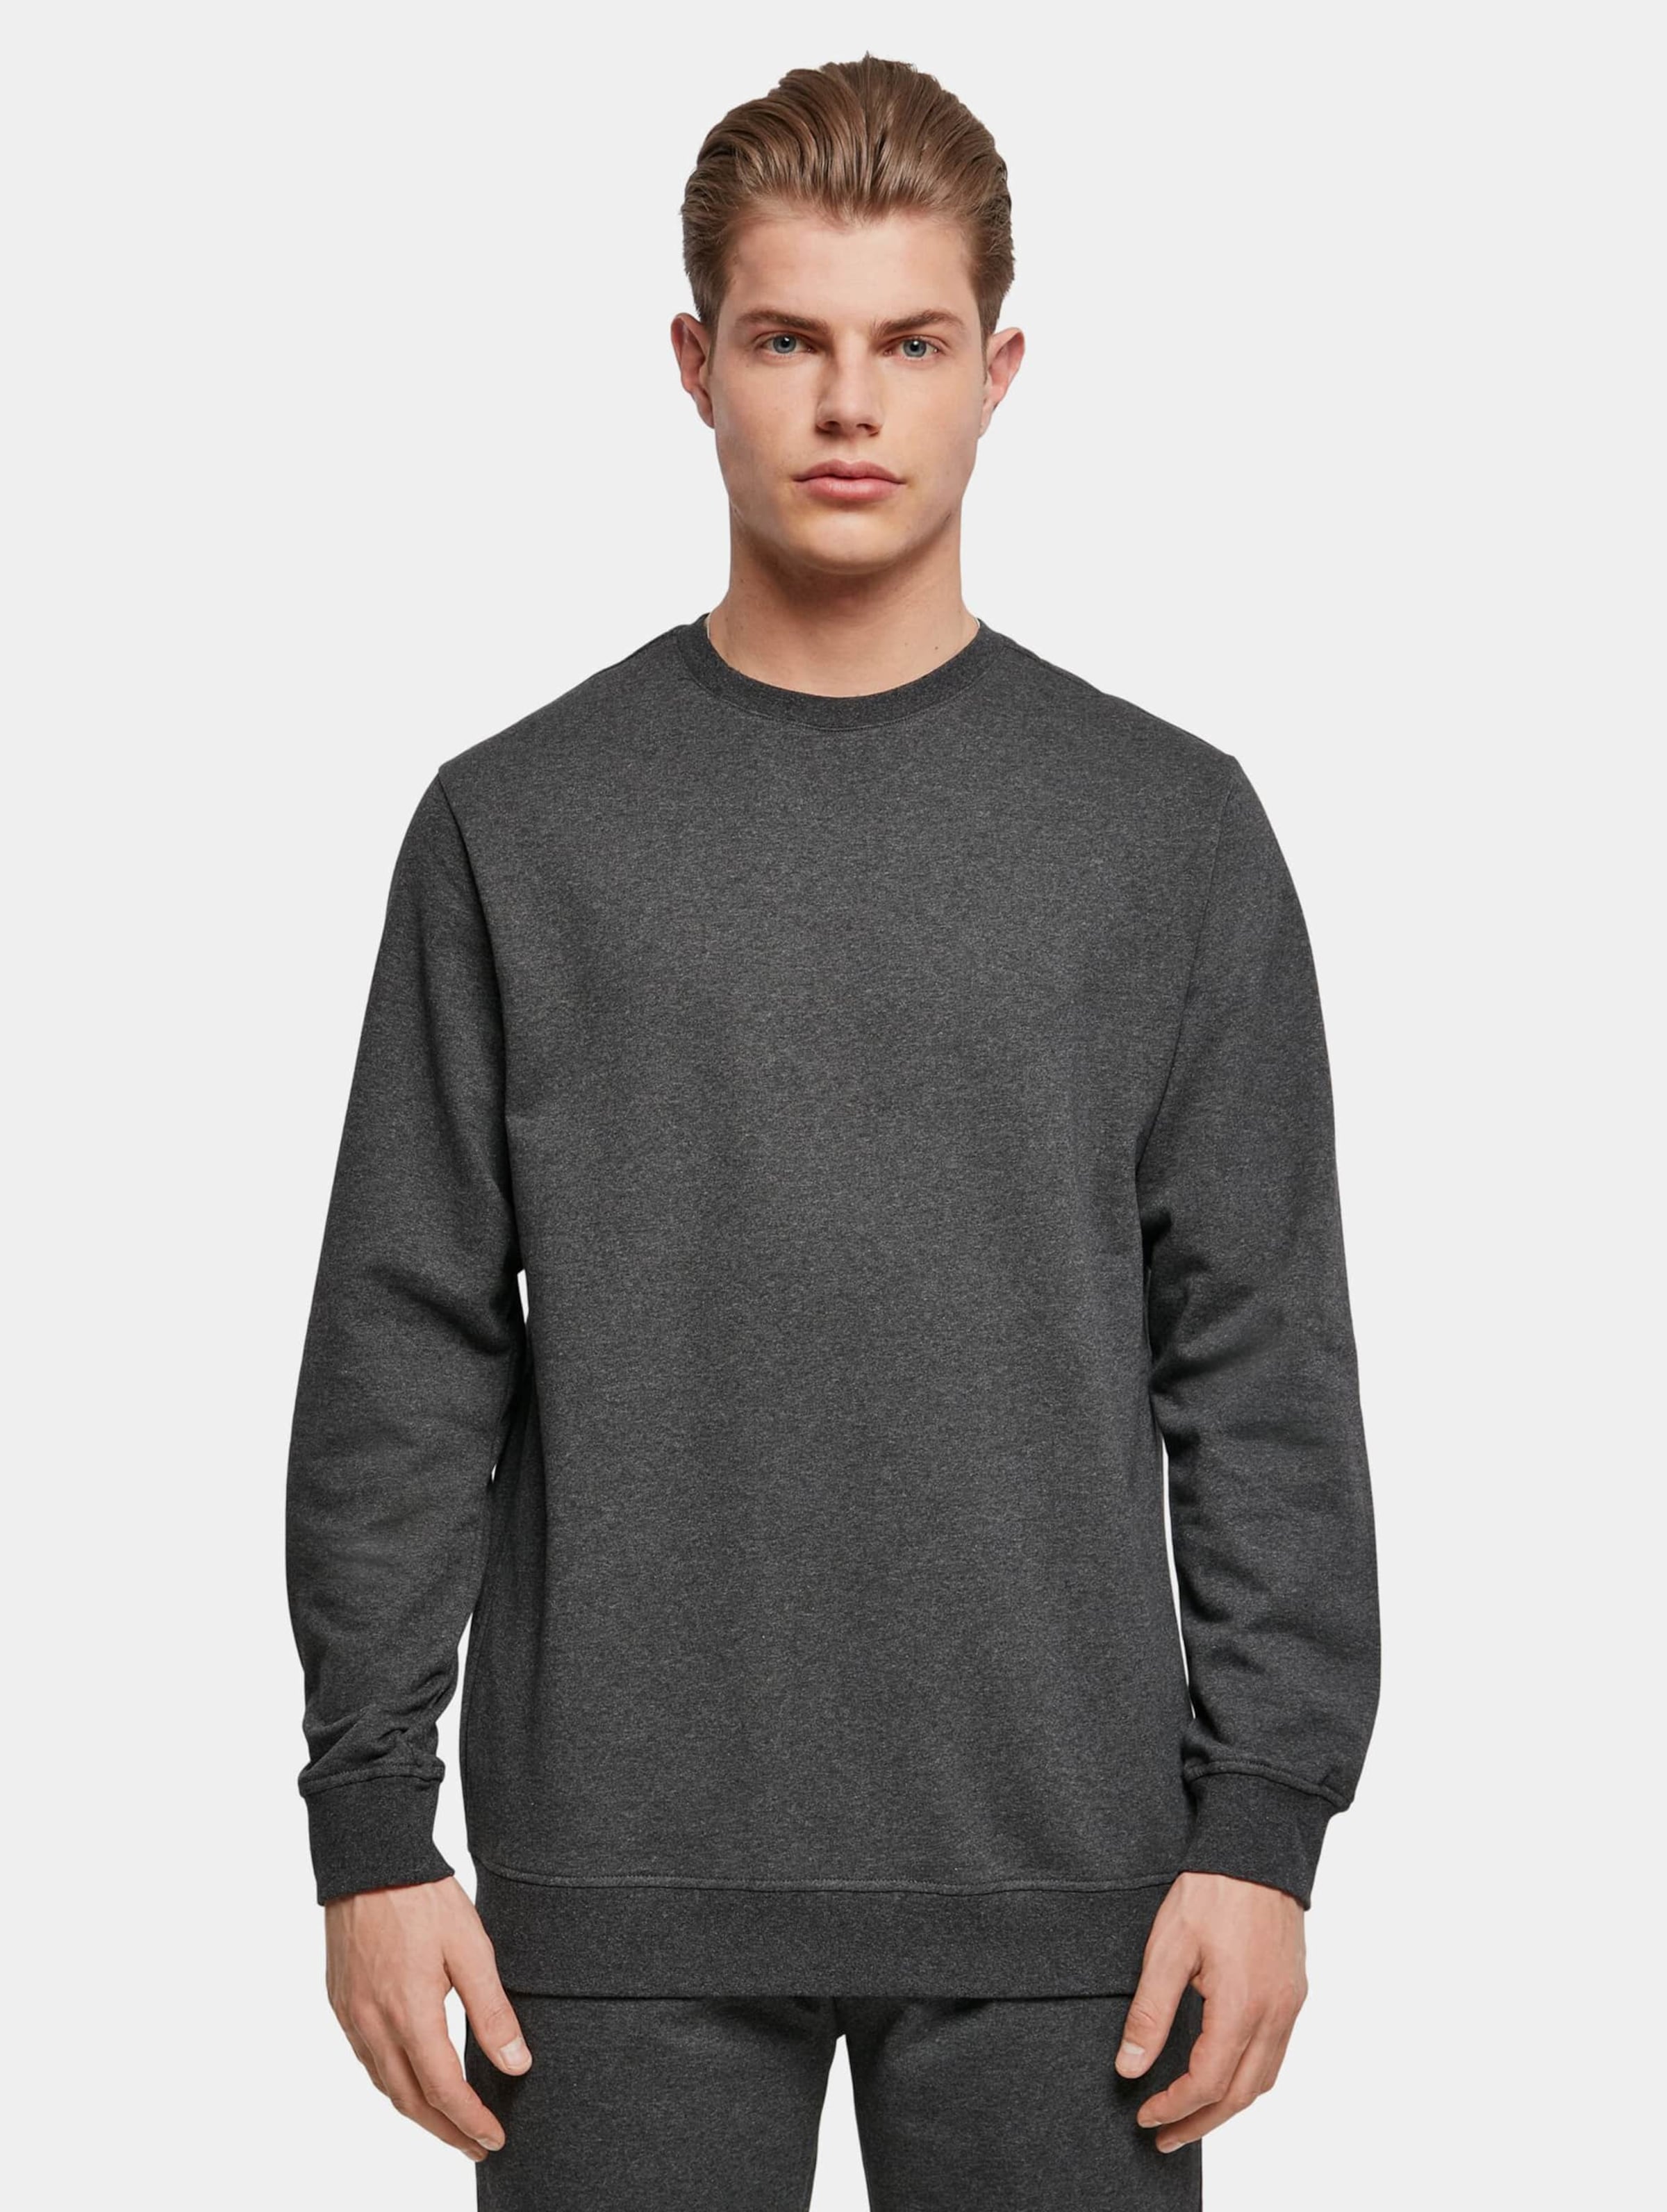 Basic Crewneck Sweater met ronde hals Charcoal - M